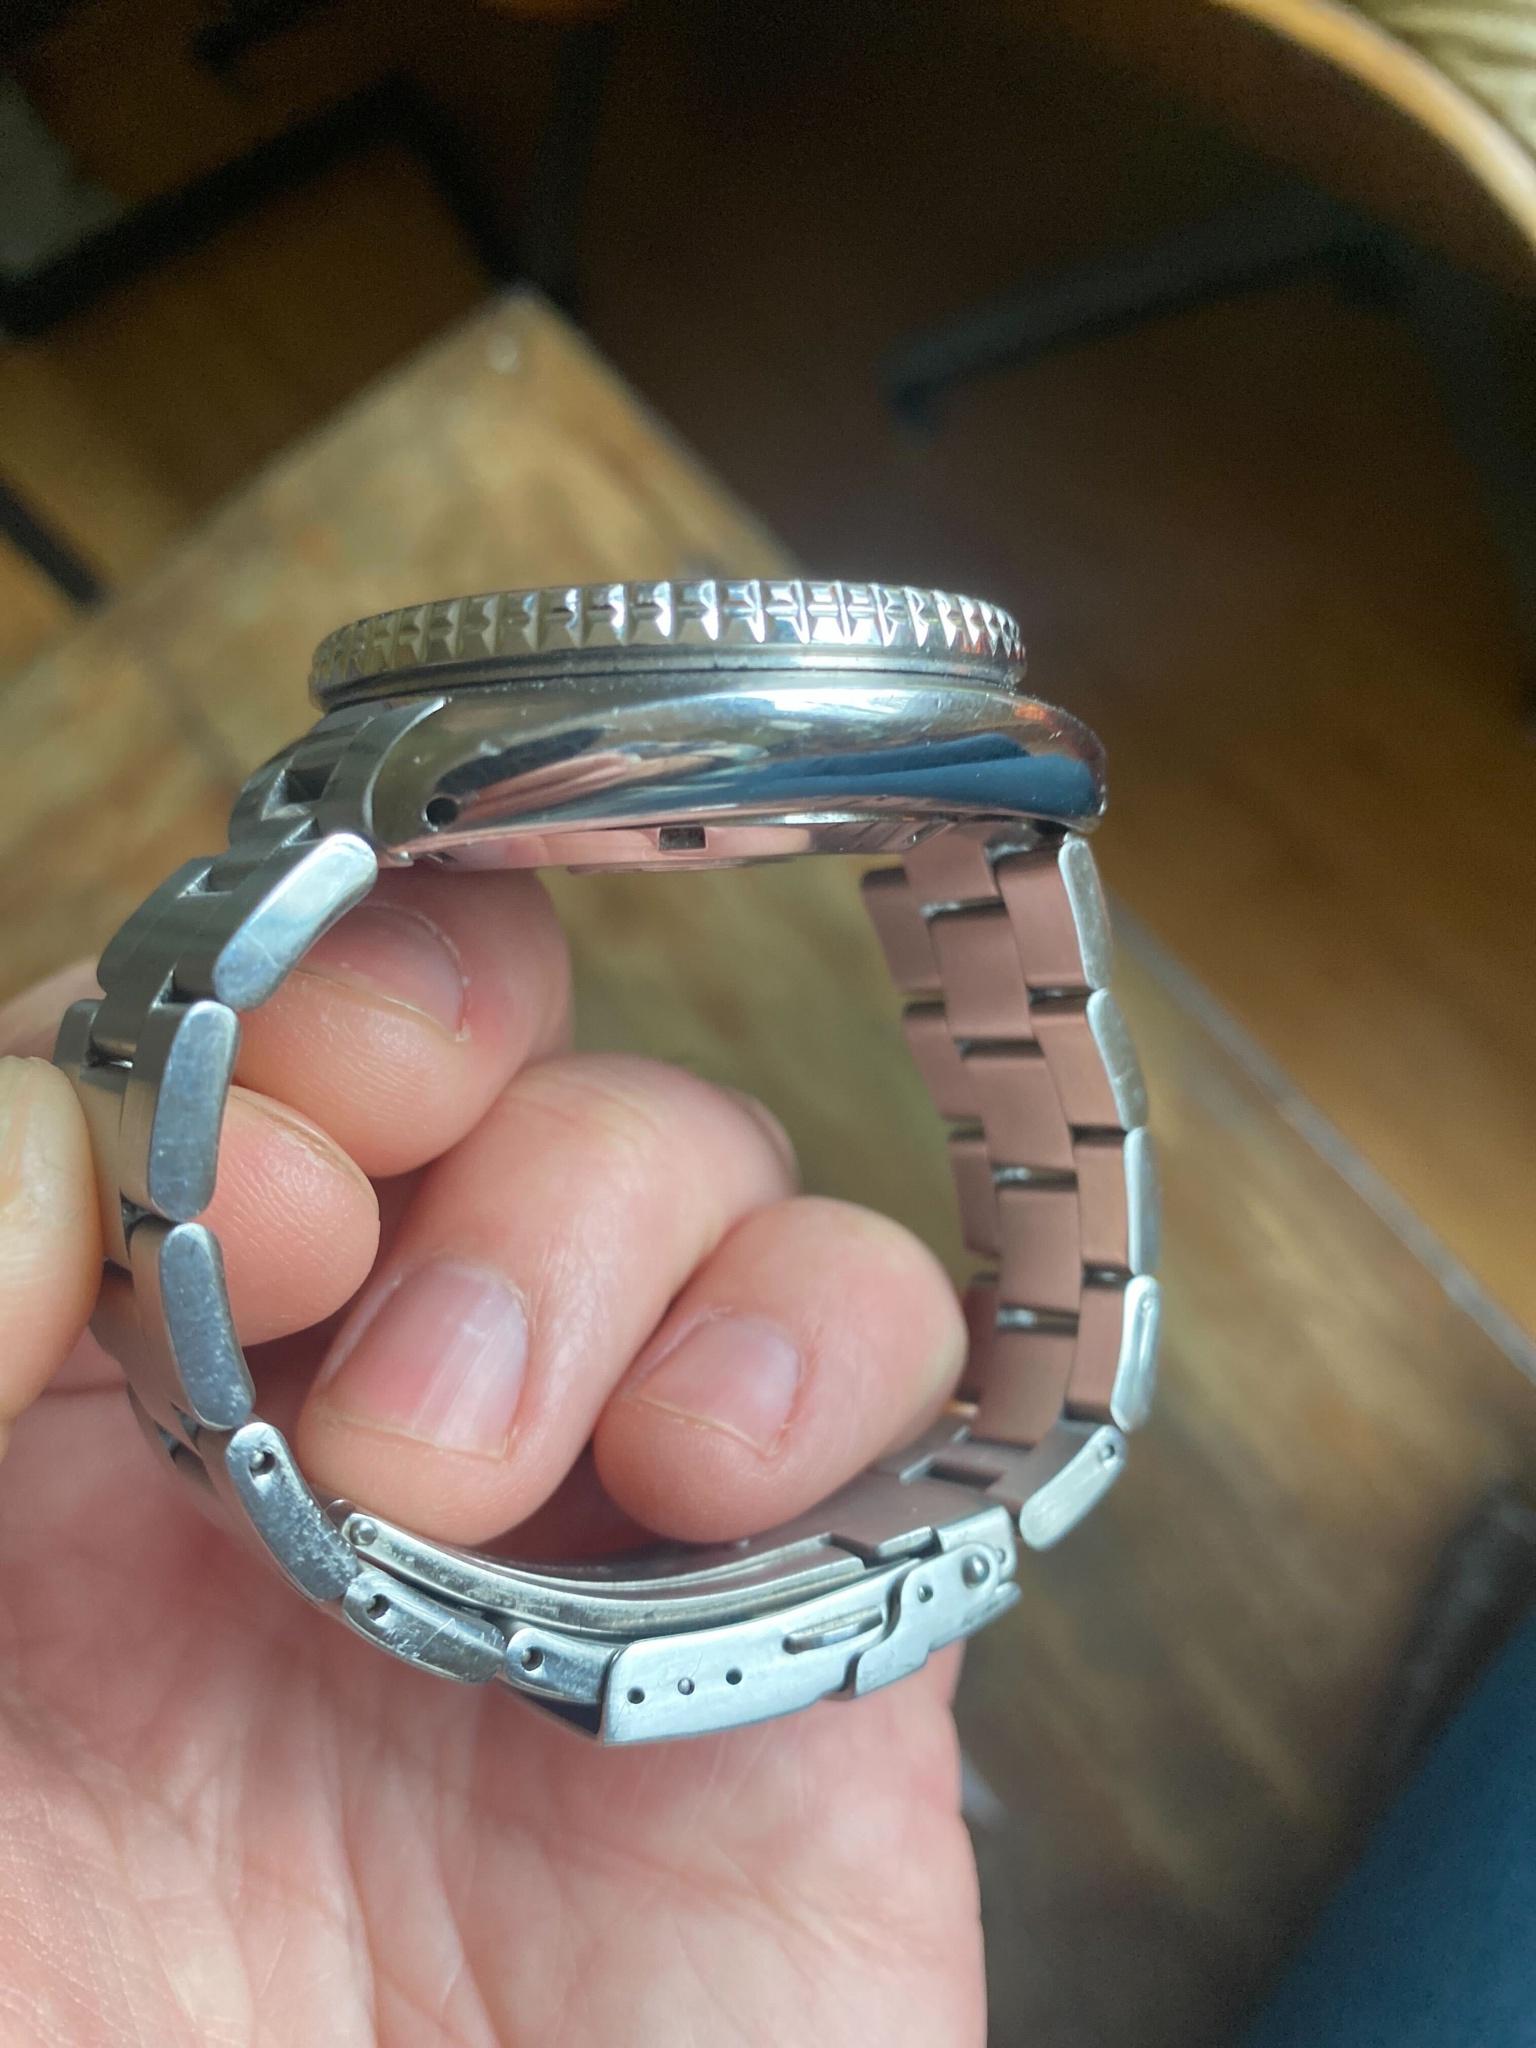 WTS] Seiko Turtle SRP777-- $279 worth of straps/bracelets thrown